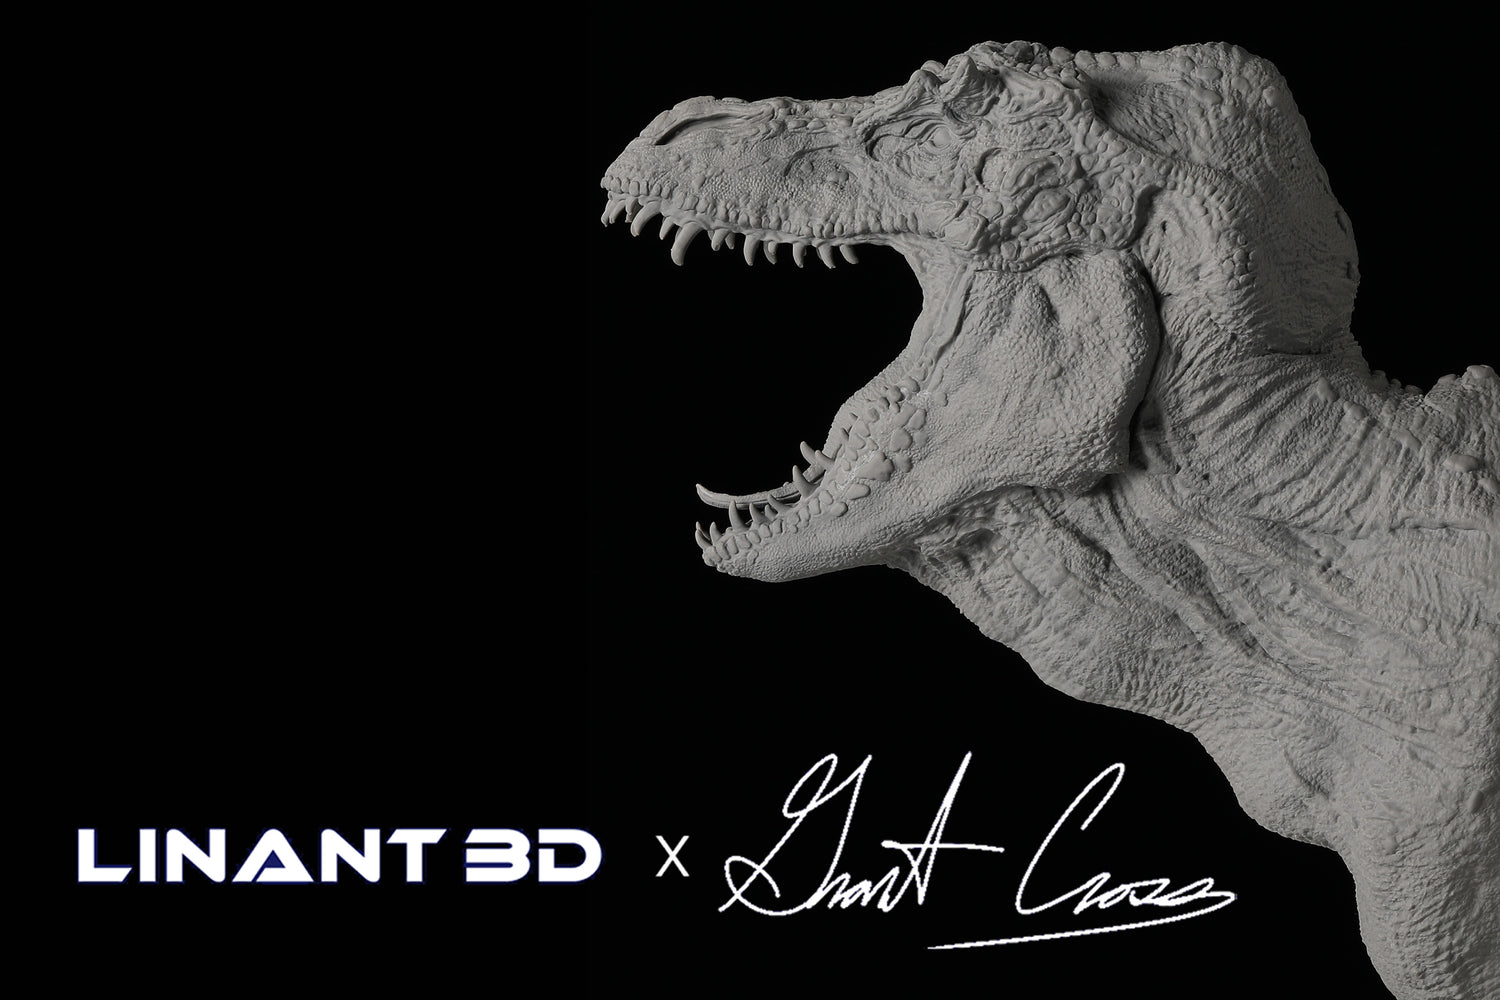 LINANT 3D X Grant Cross - Interview